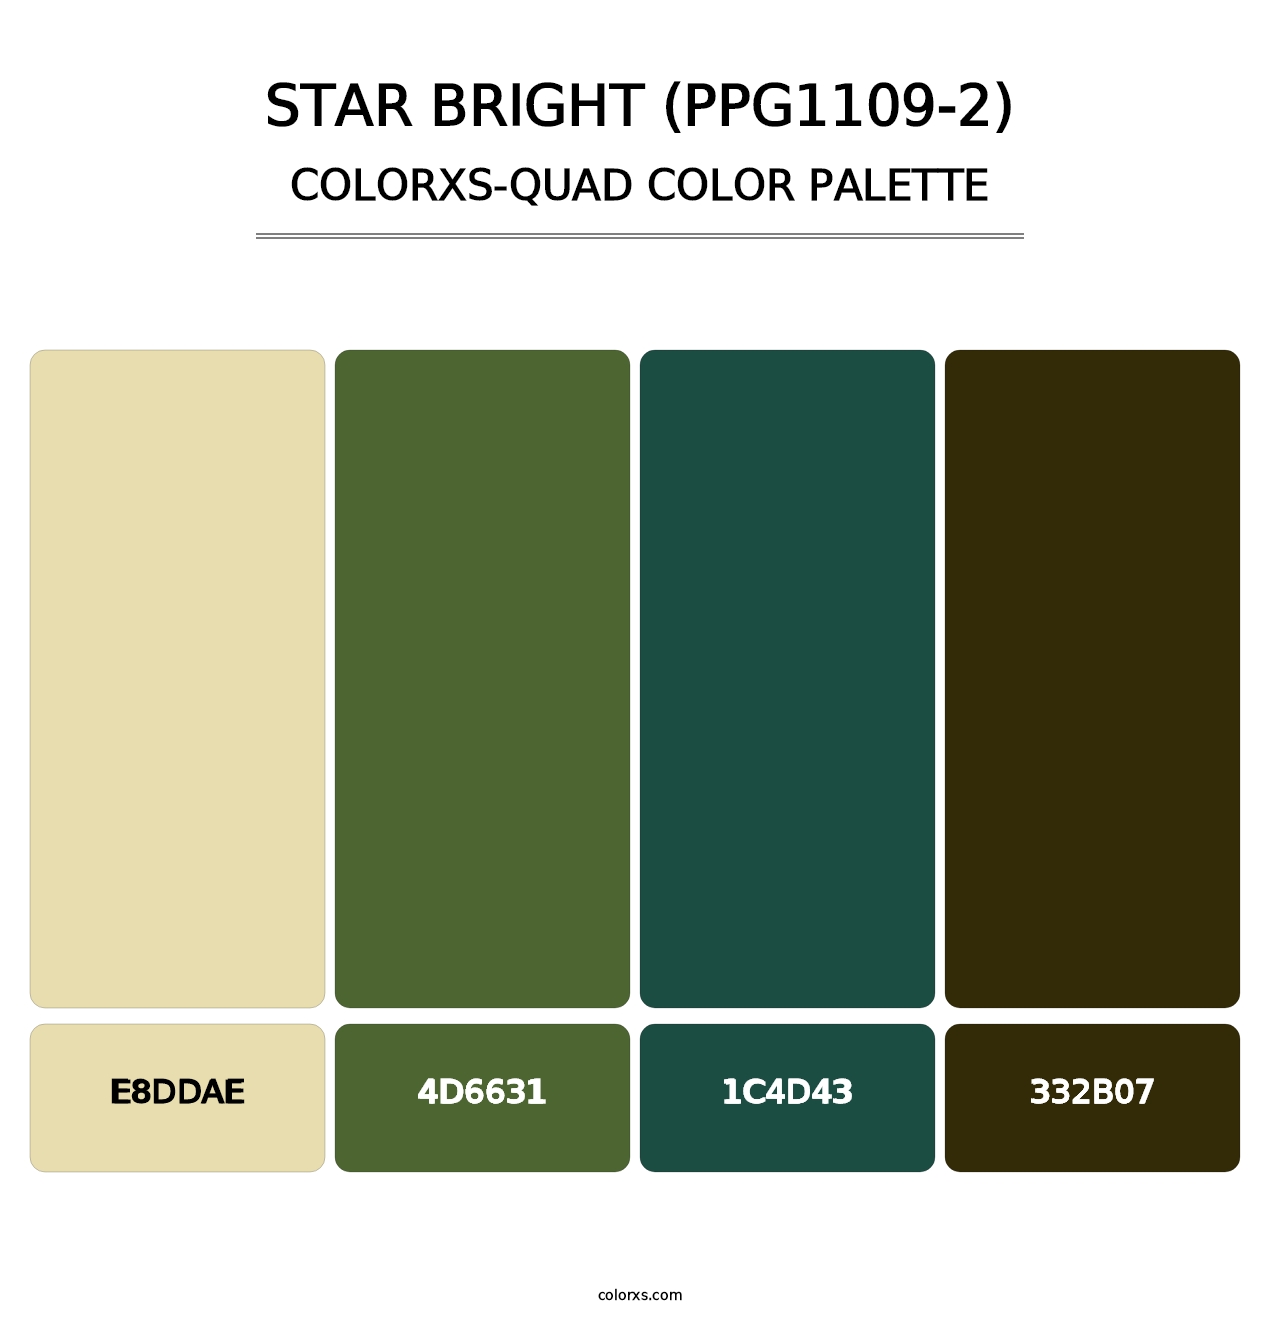 Star Bright (PPG1109-2) - Colorxs Quad Palette